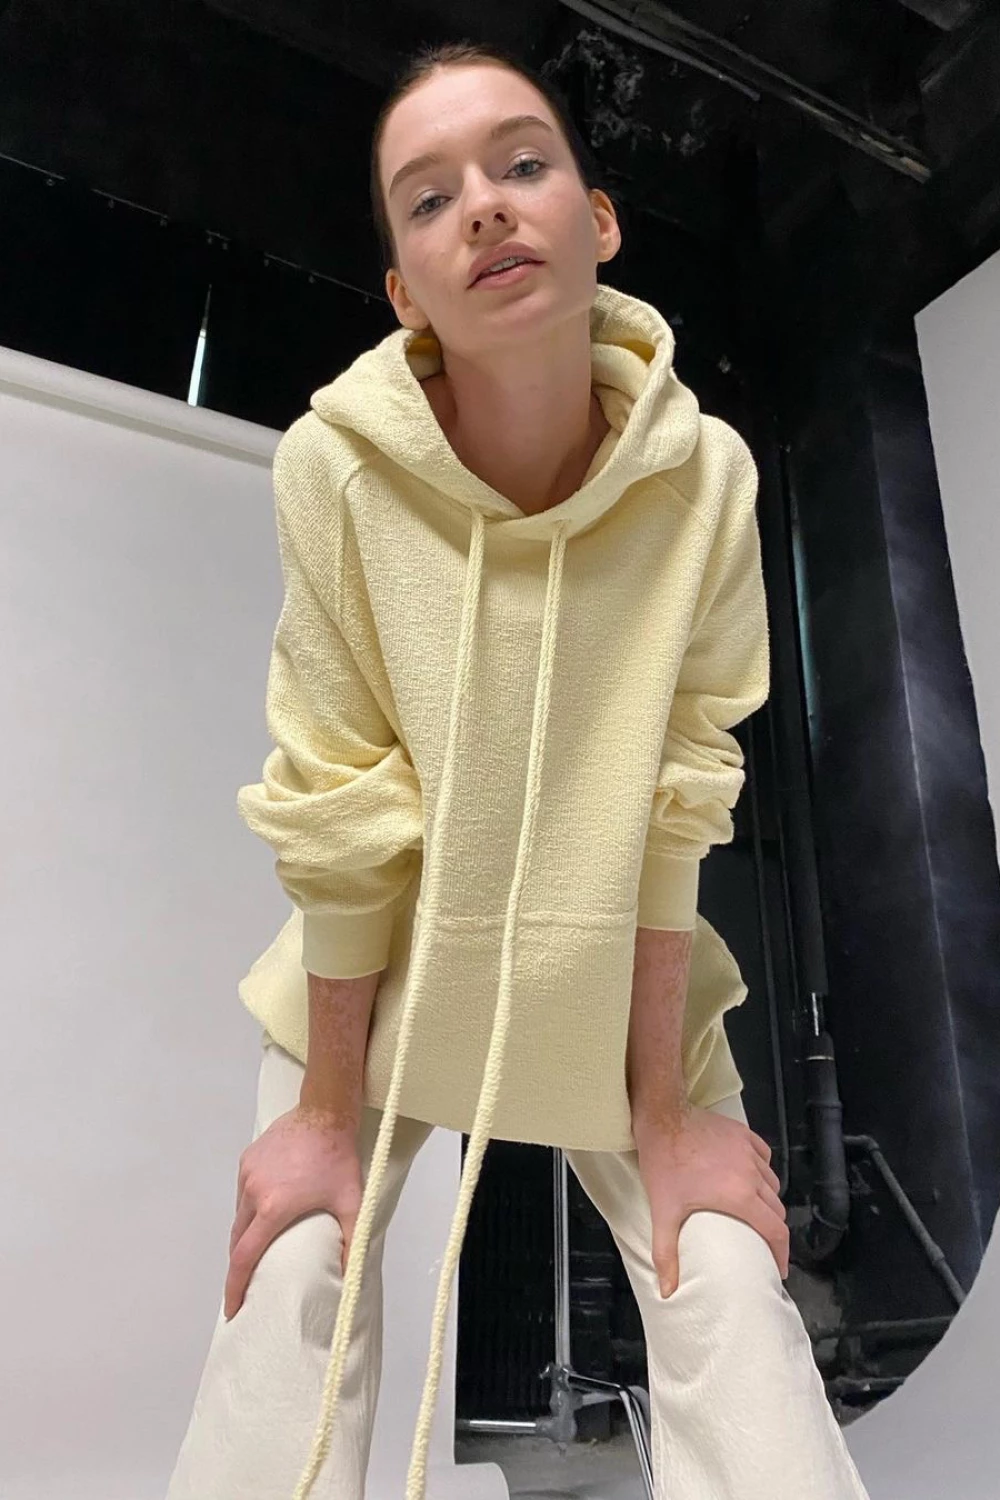 hoodie "unbrushed" in vanilla color